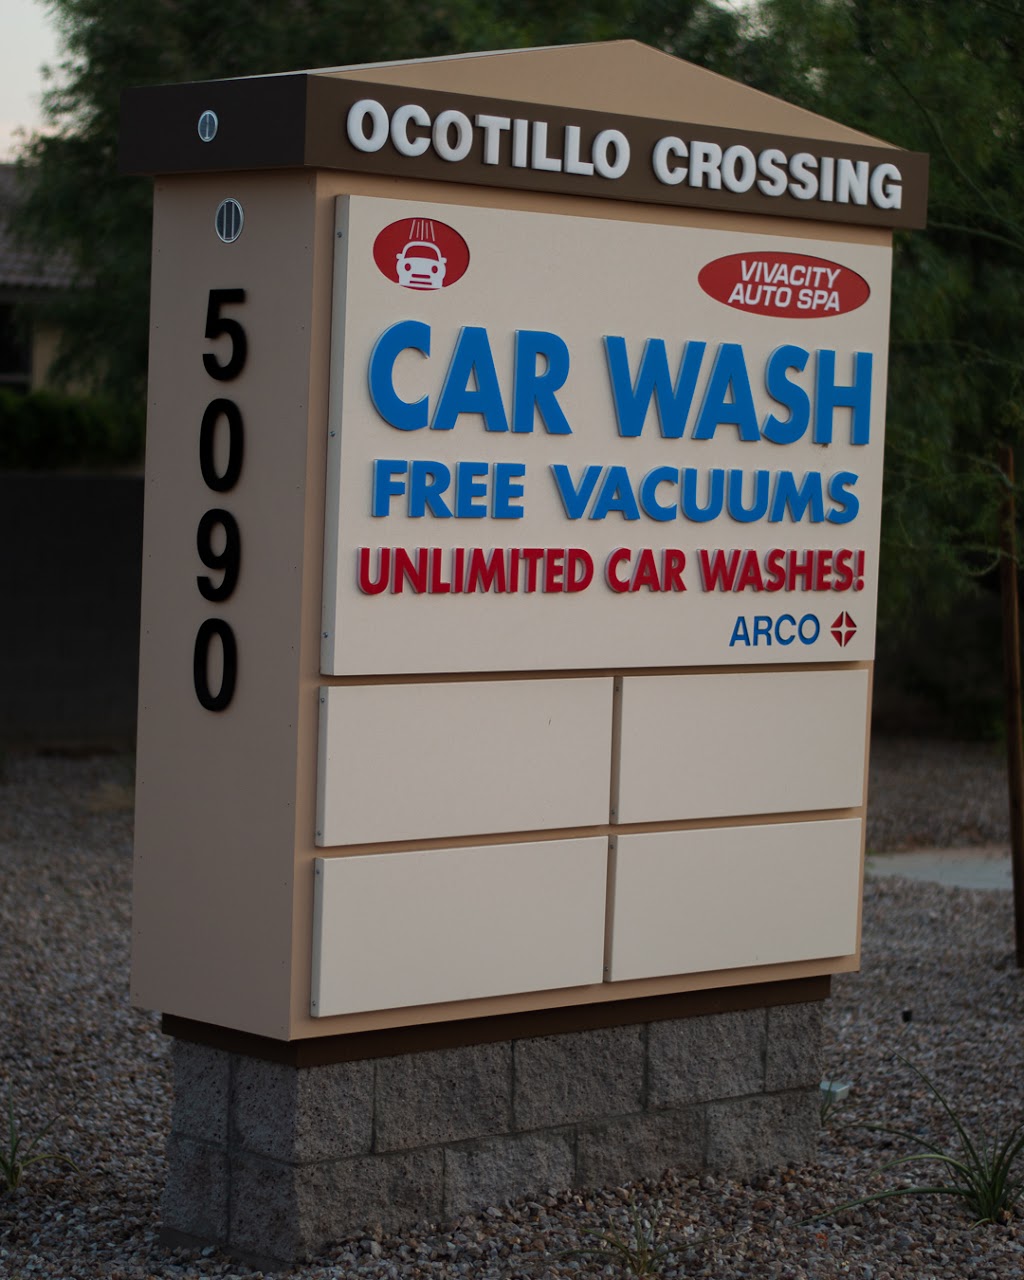 Vivacity Auto Spa | 5090 S Arizona Ave, Chandler, AZ 85248 | Phone: (480) 219-2299